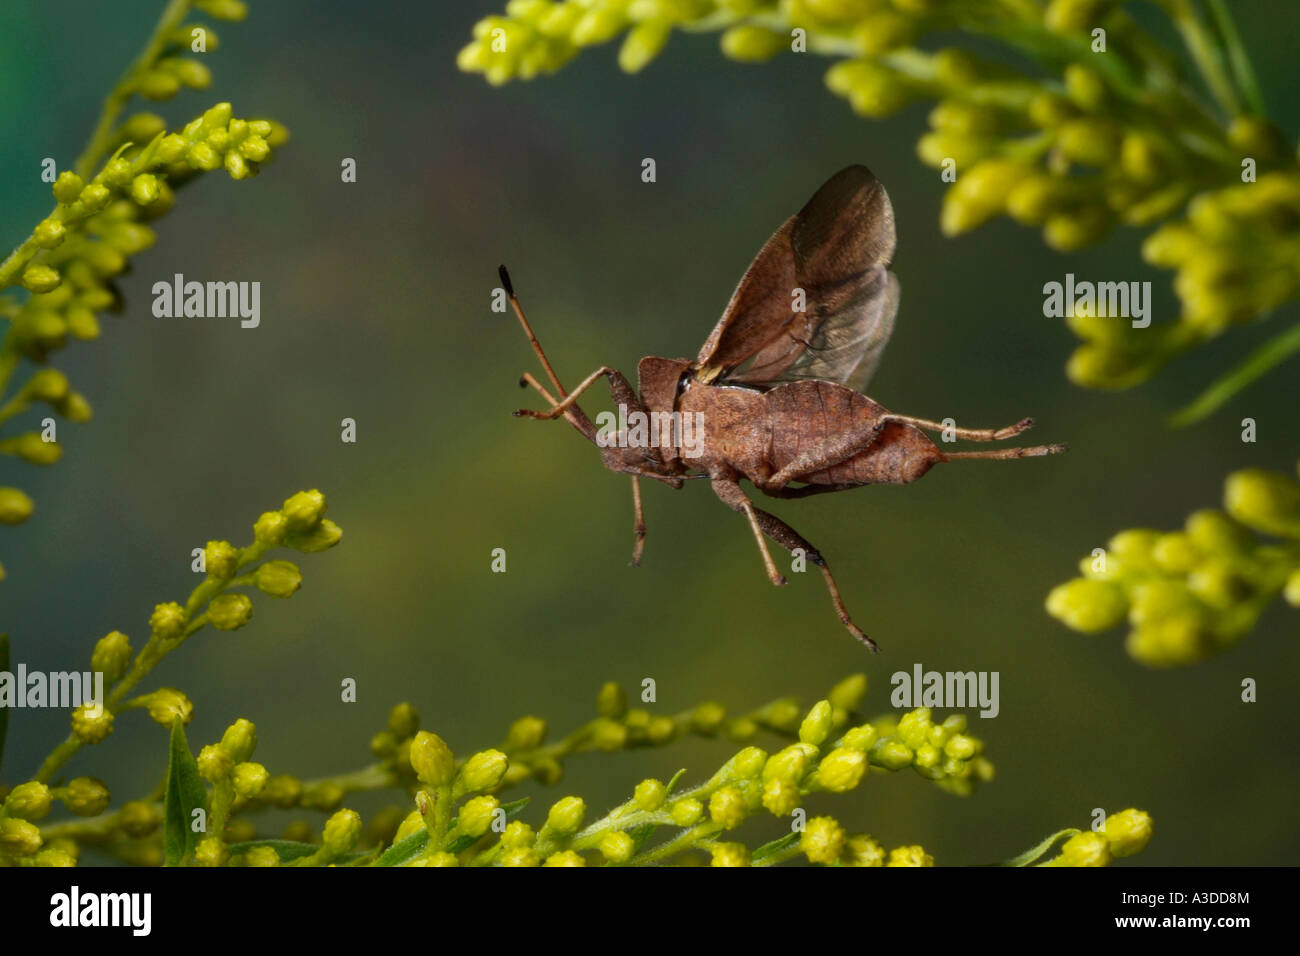 Dock bug (Coreus marginatus) Stock Photo